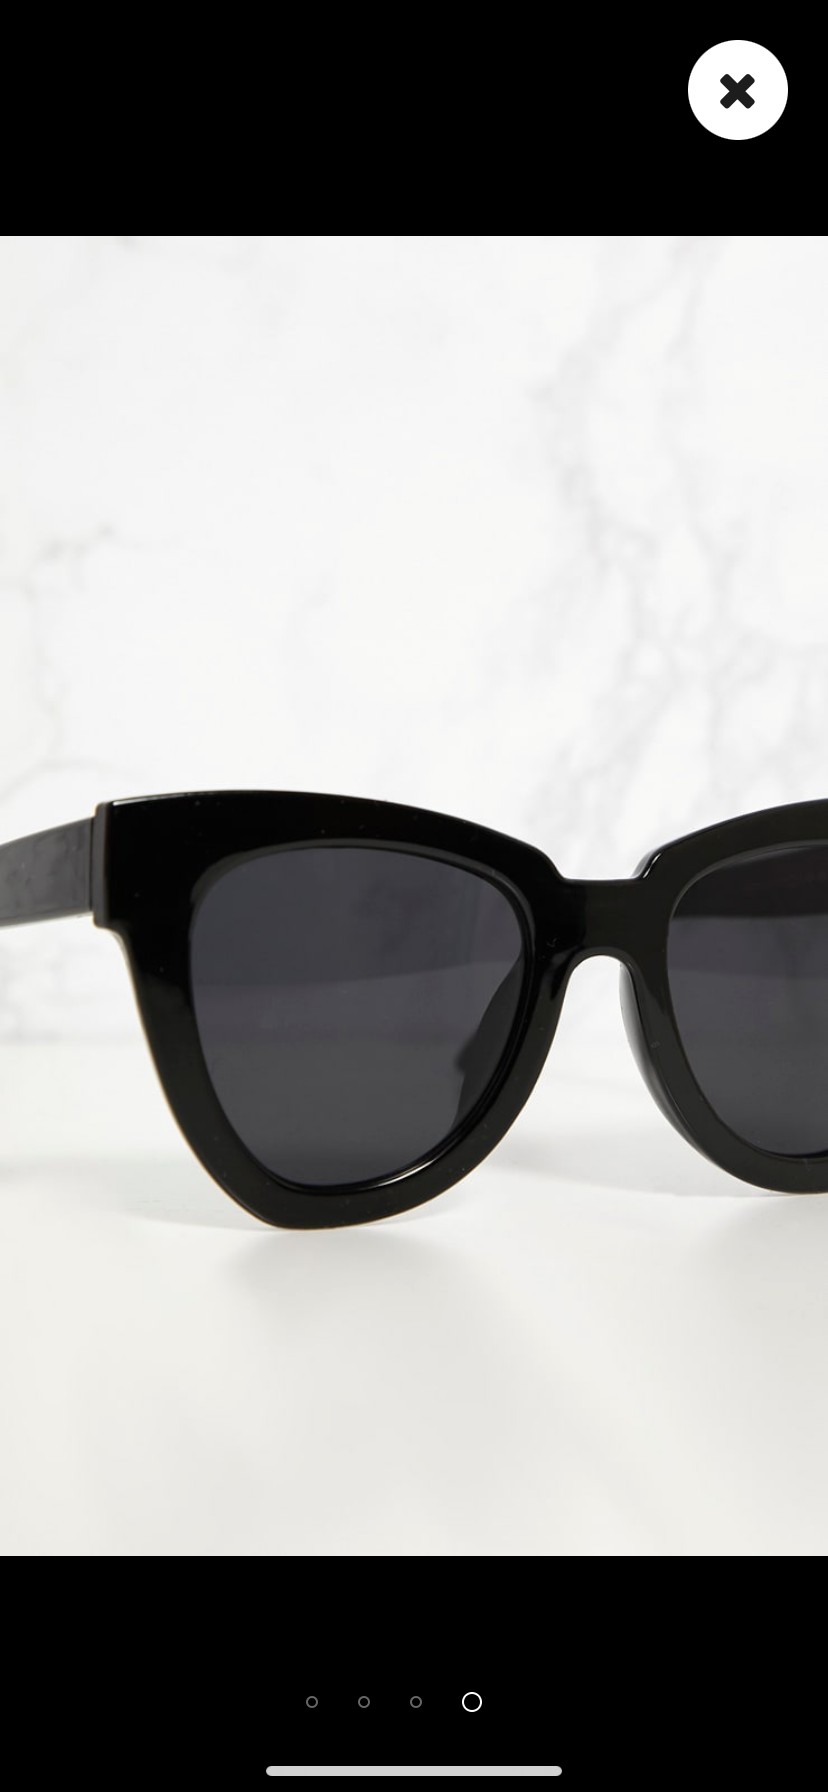 Winged sunglasses